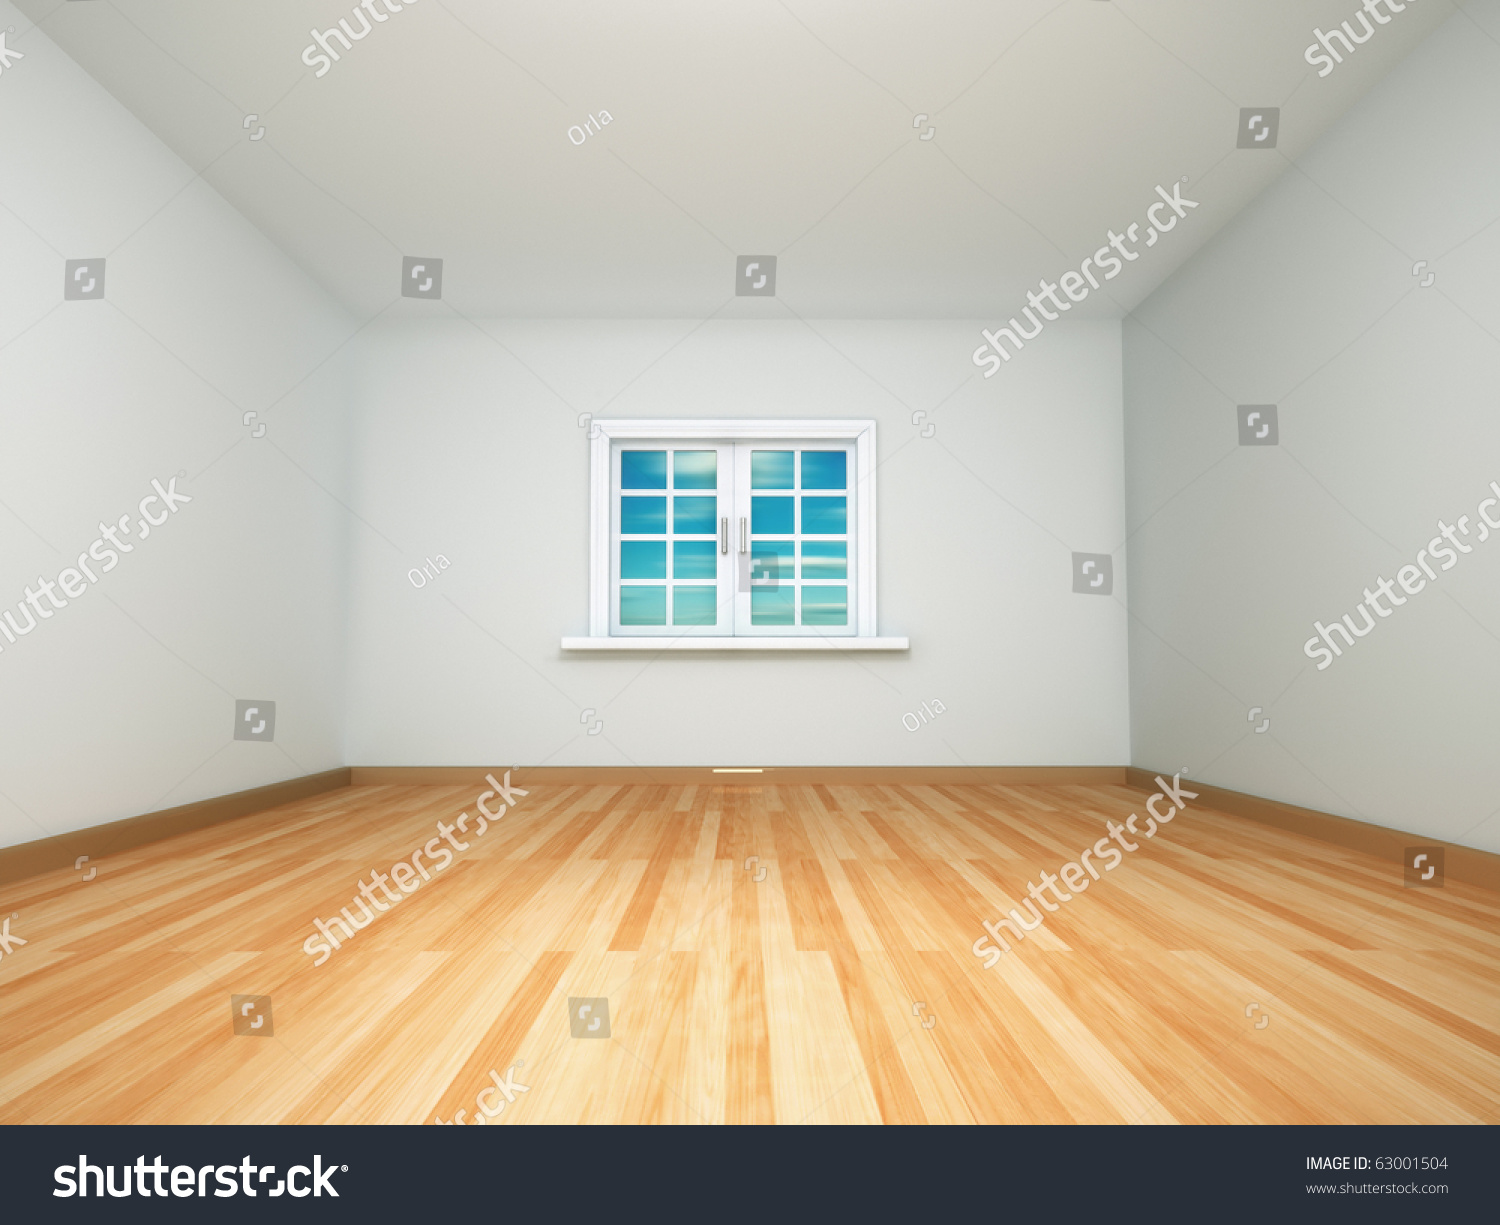 сонник пустая комната без мебели